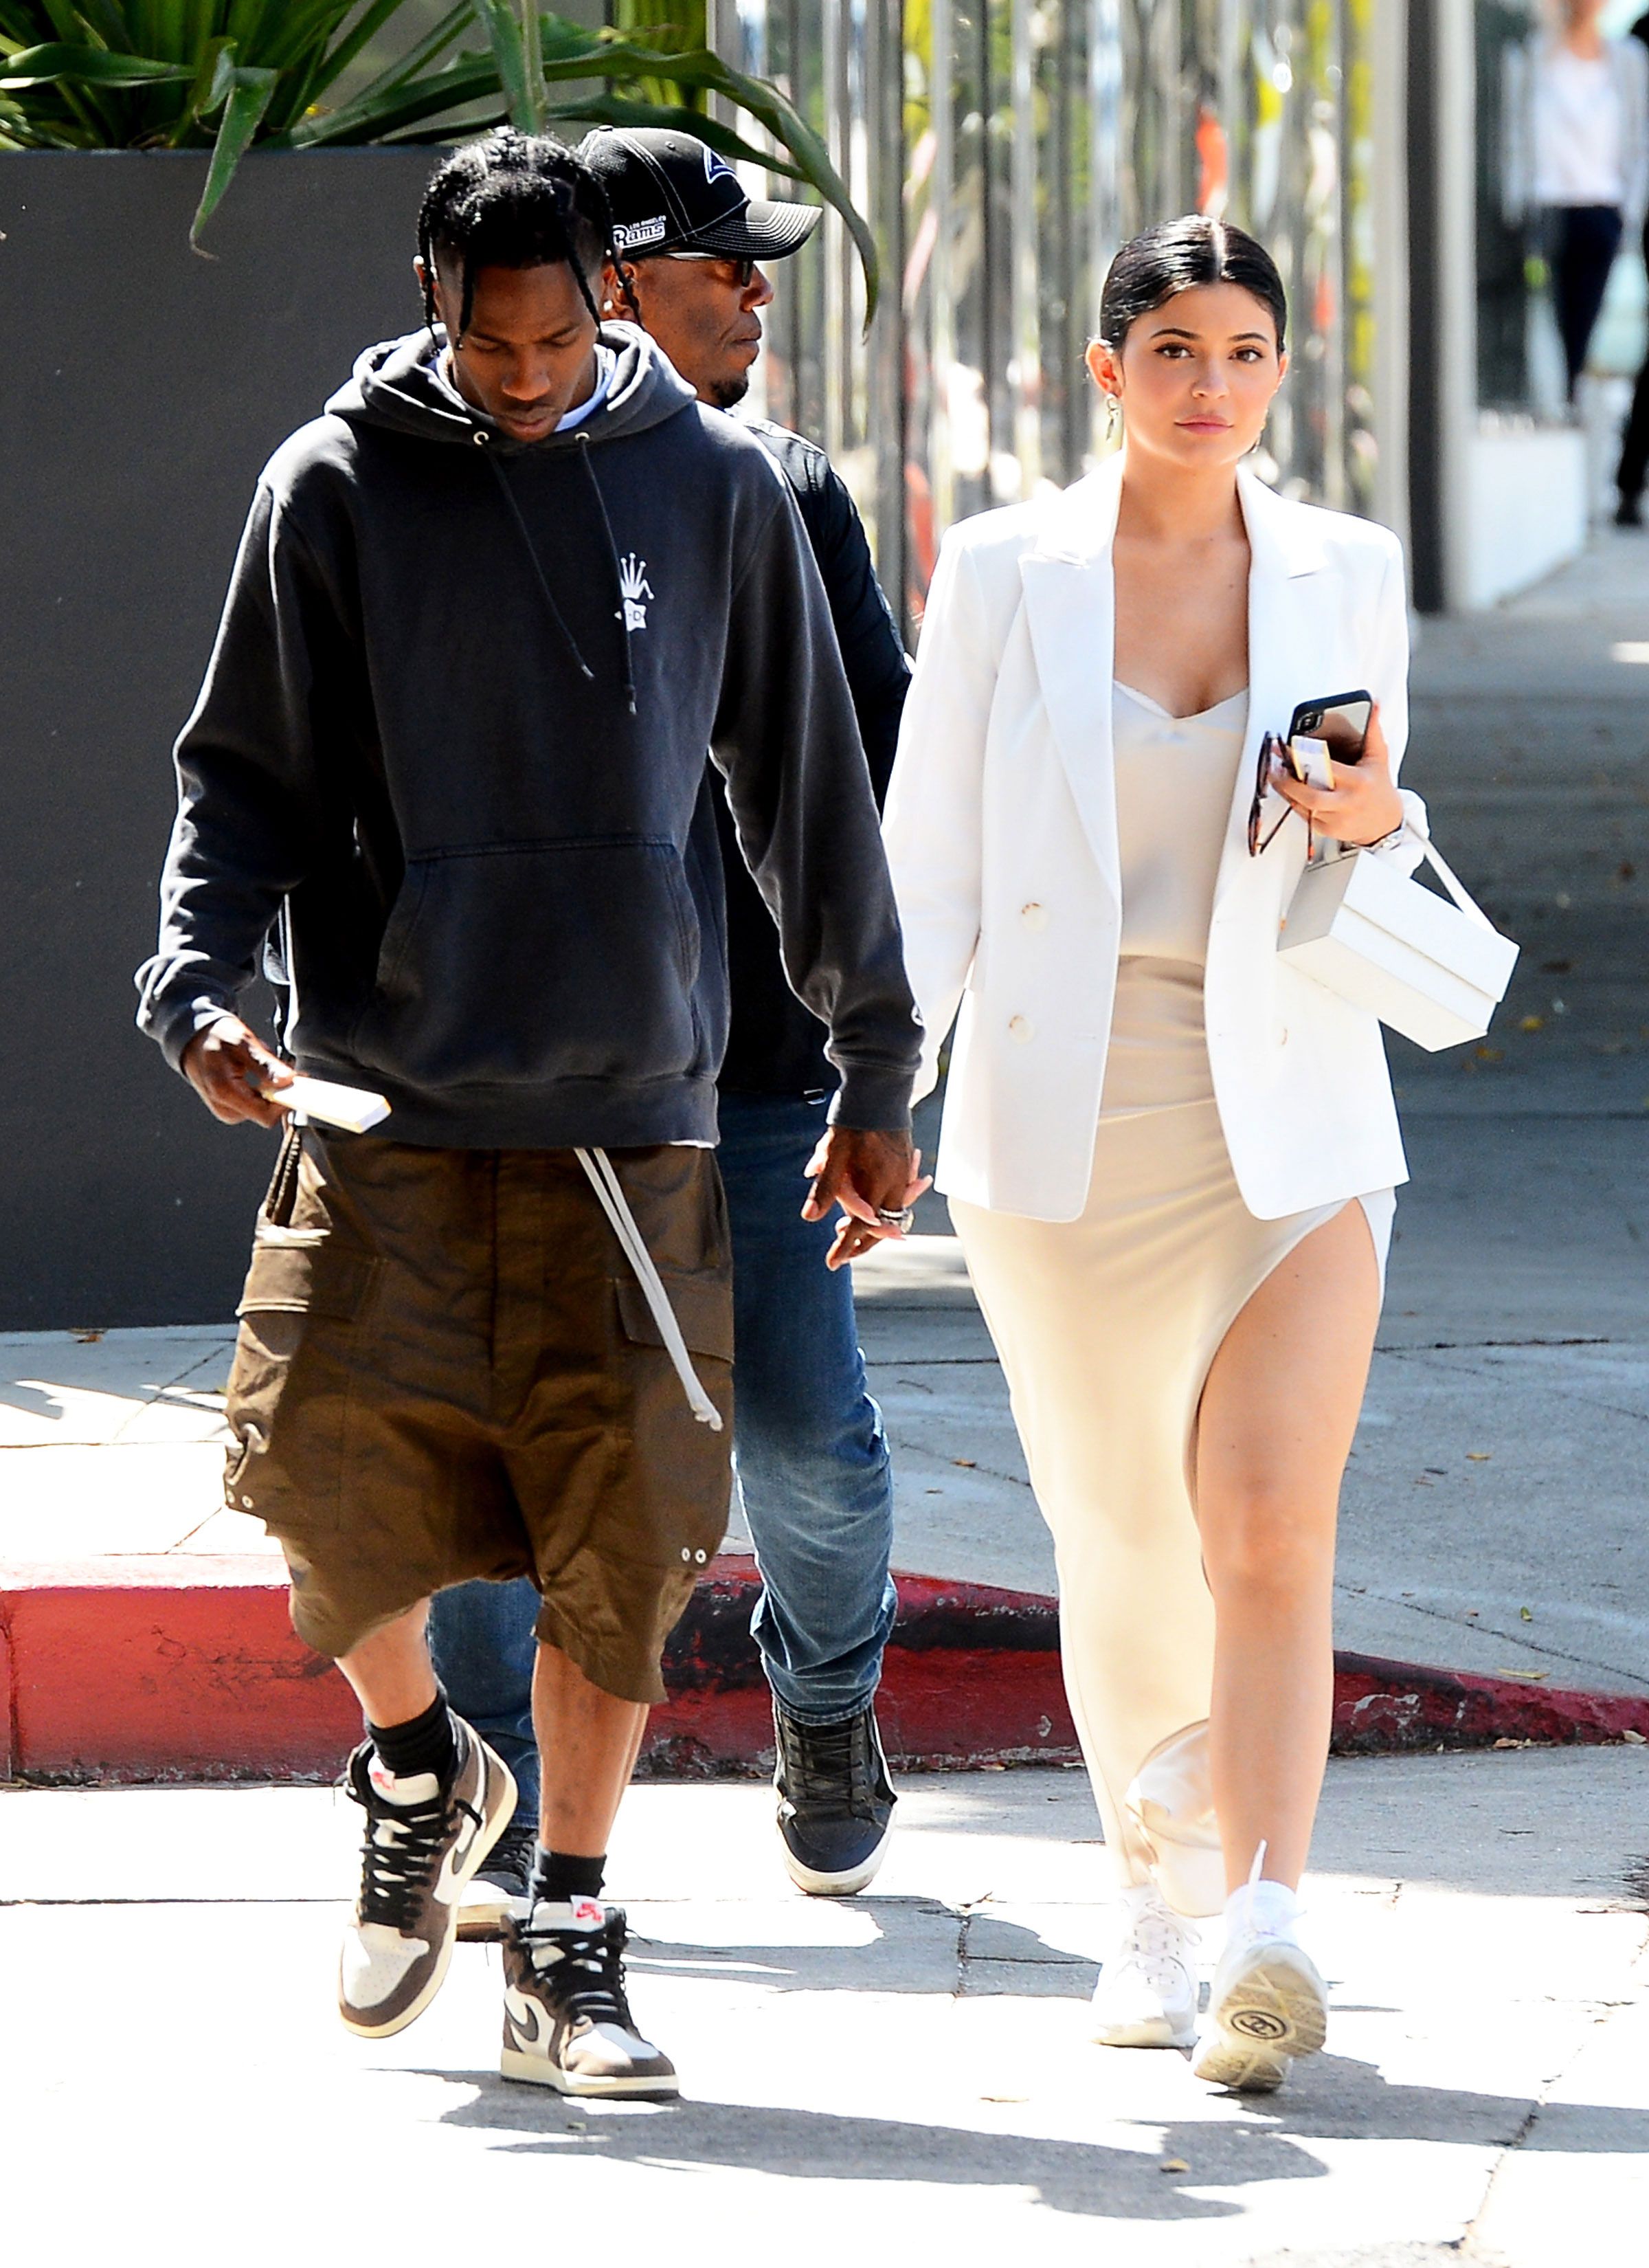 Kylie Jenner shows legs in mini dress with Travis Scott